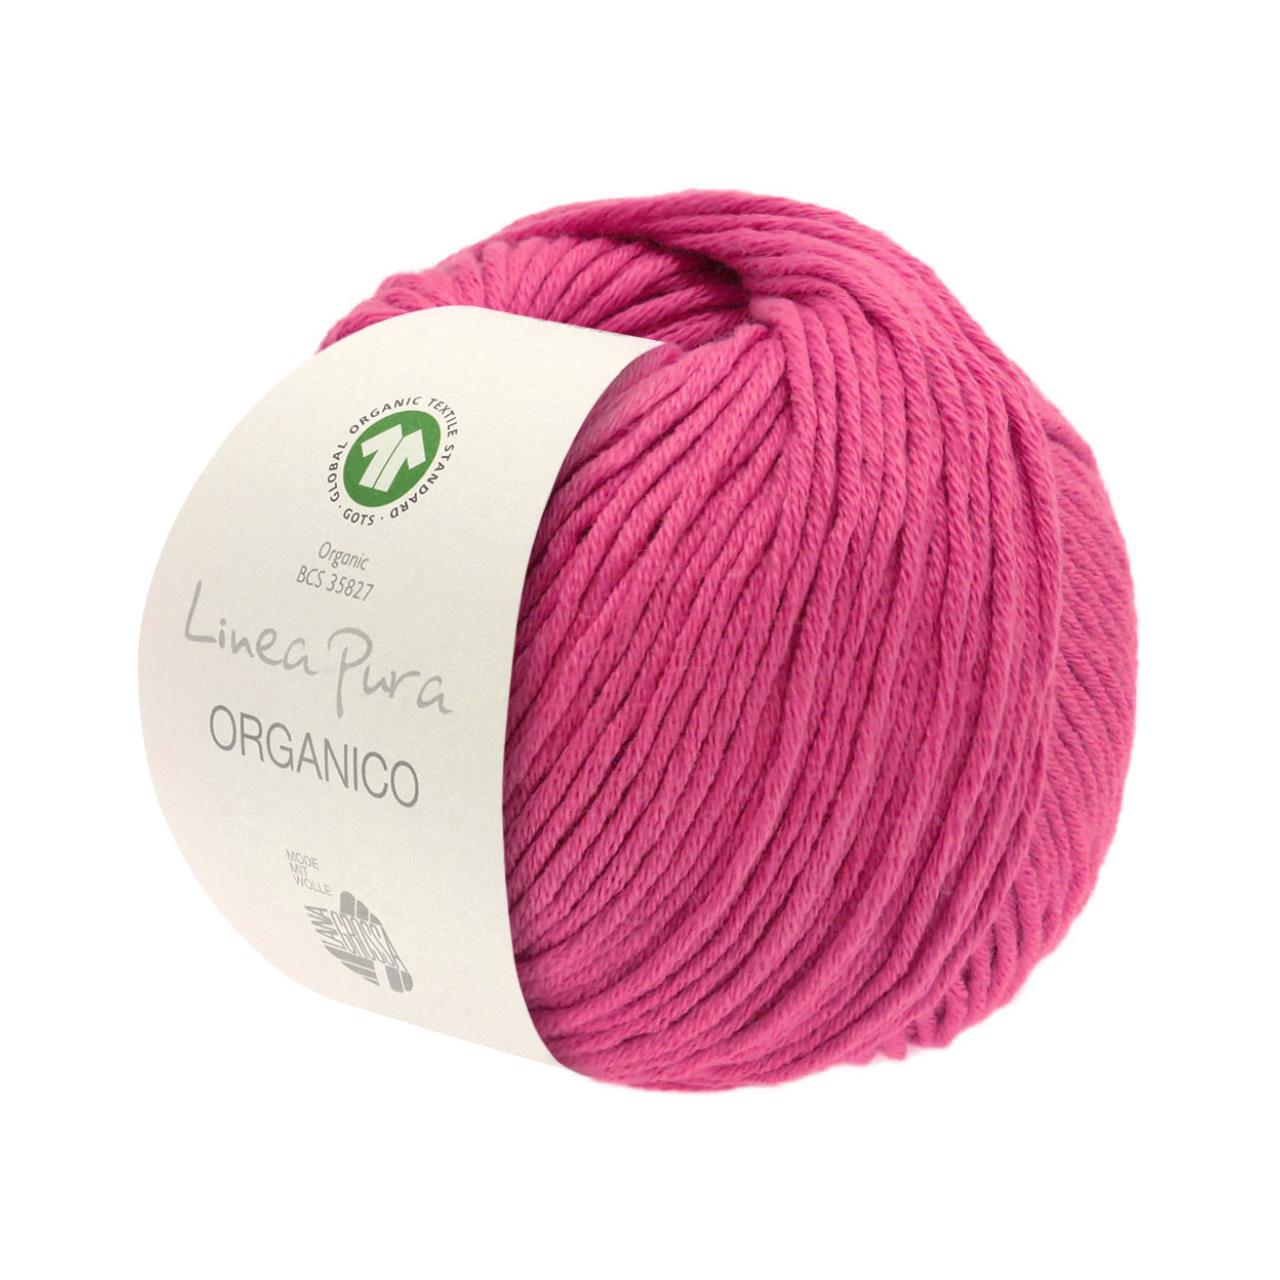 Organico (Linea Pura) 98 Pink